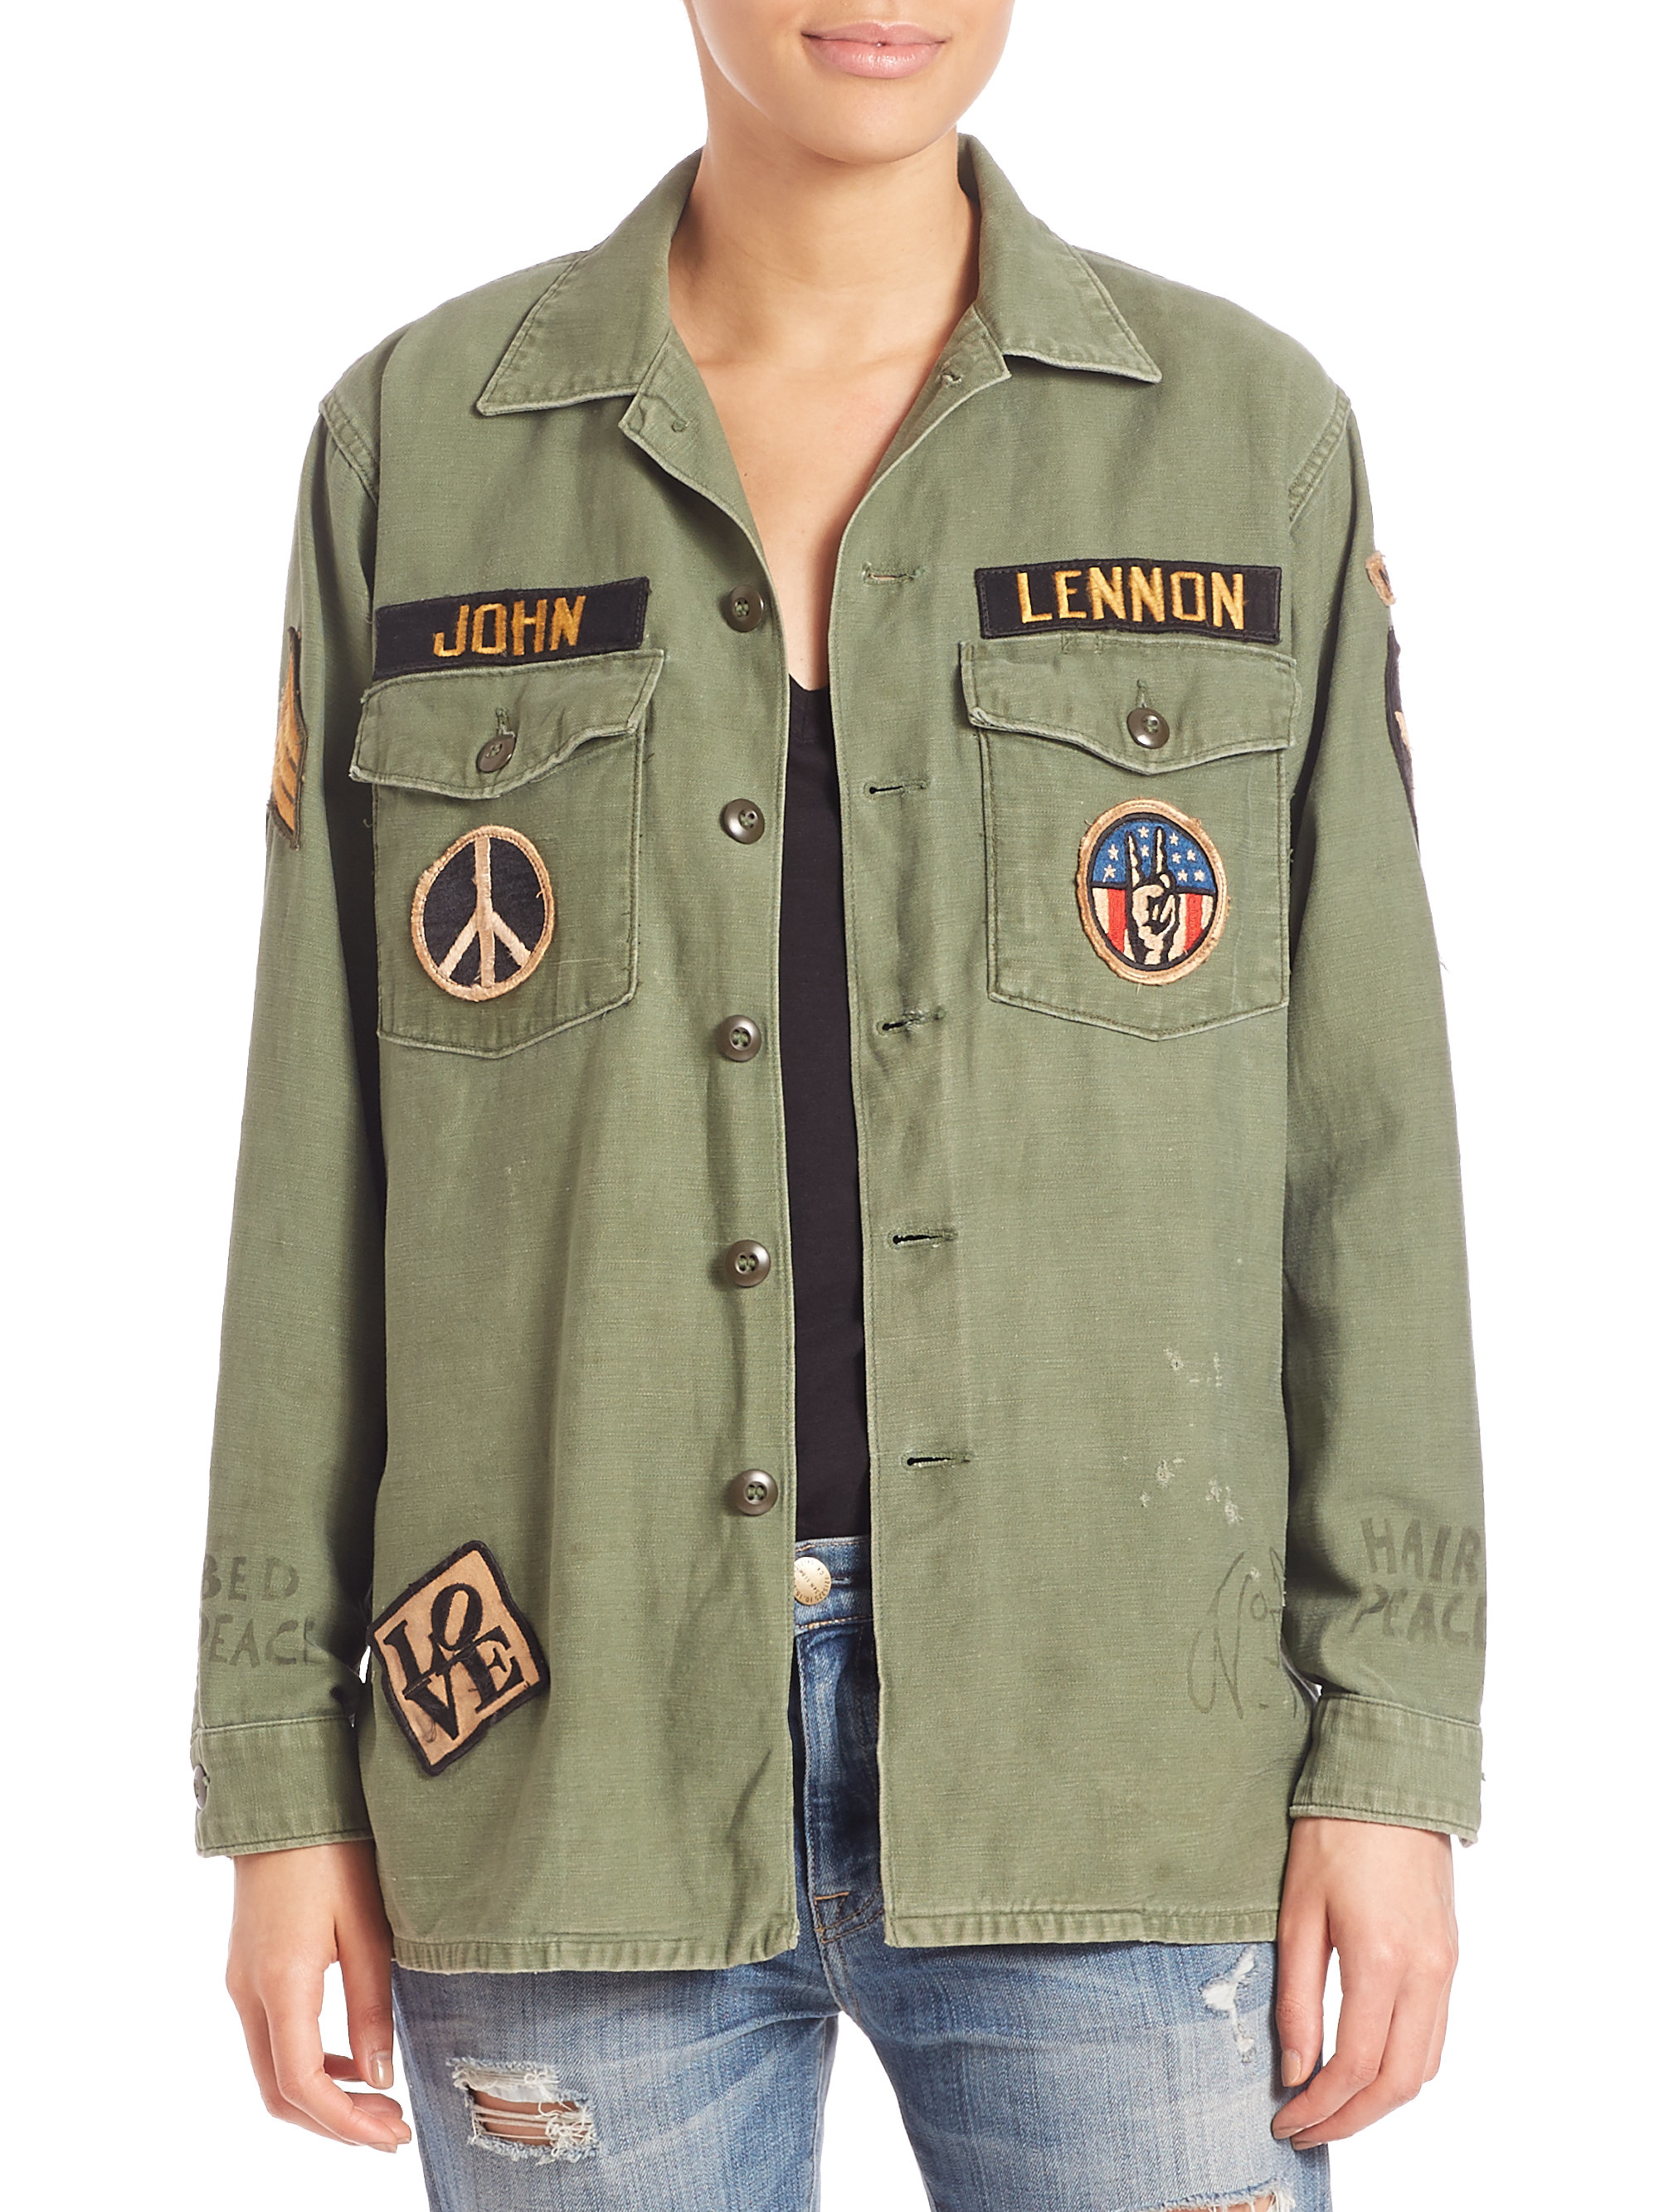 John Lennon Army Jacket - Army Military